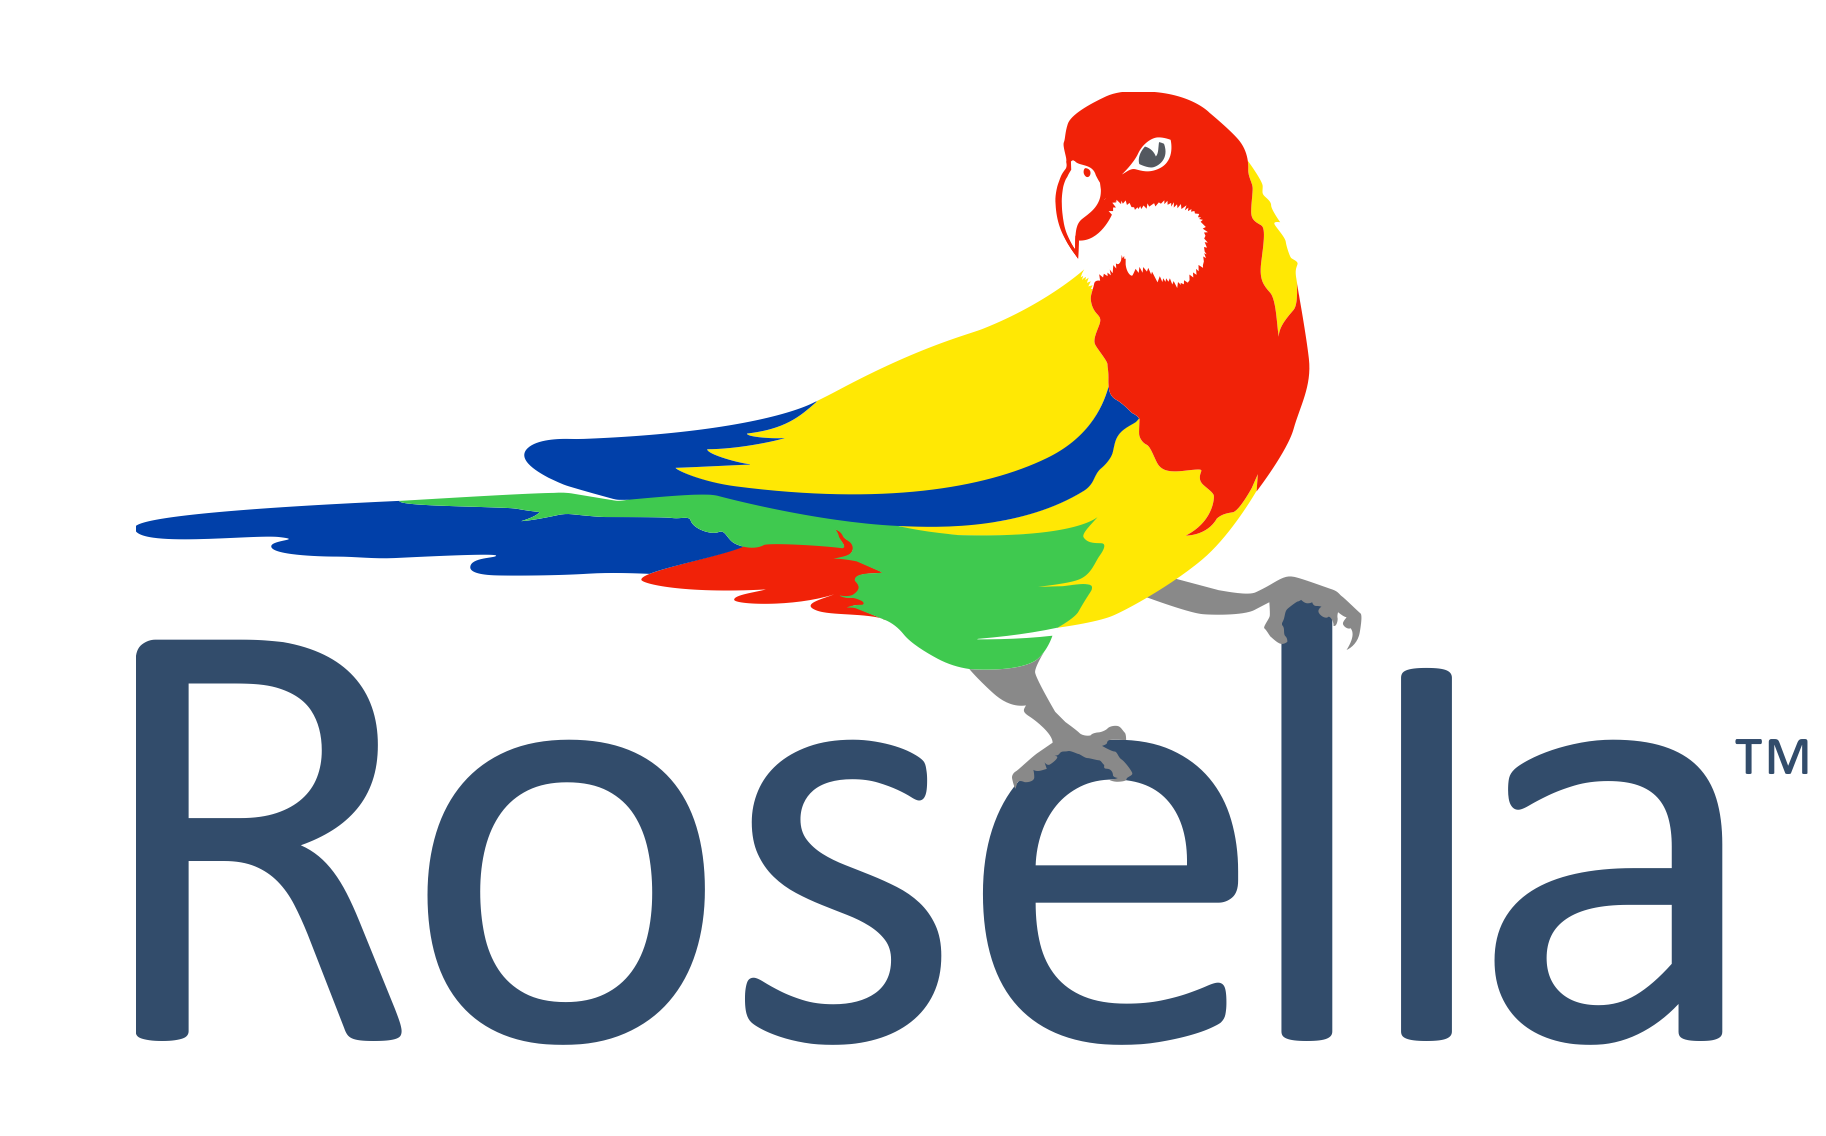 Parrot rosella